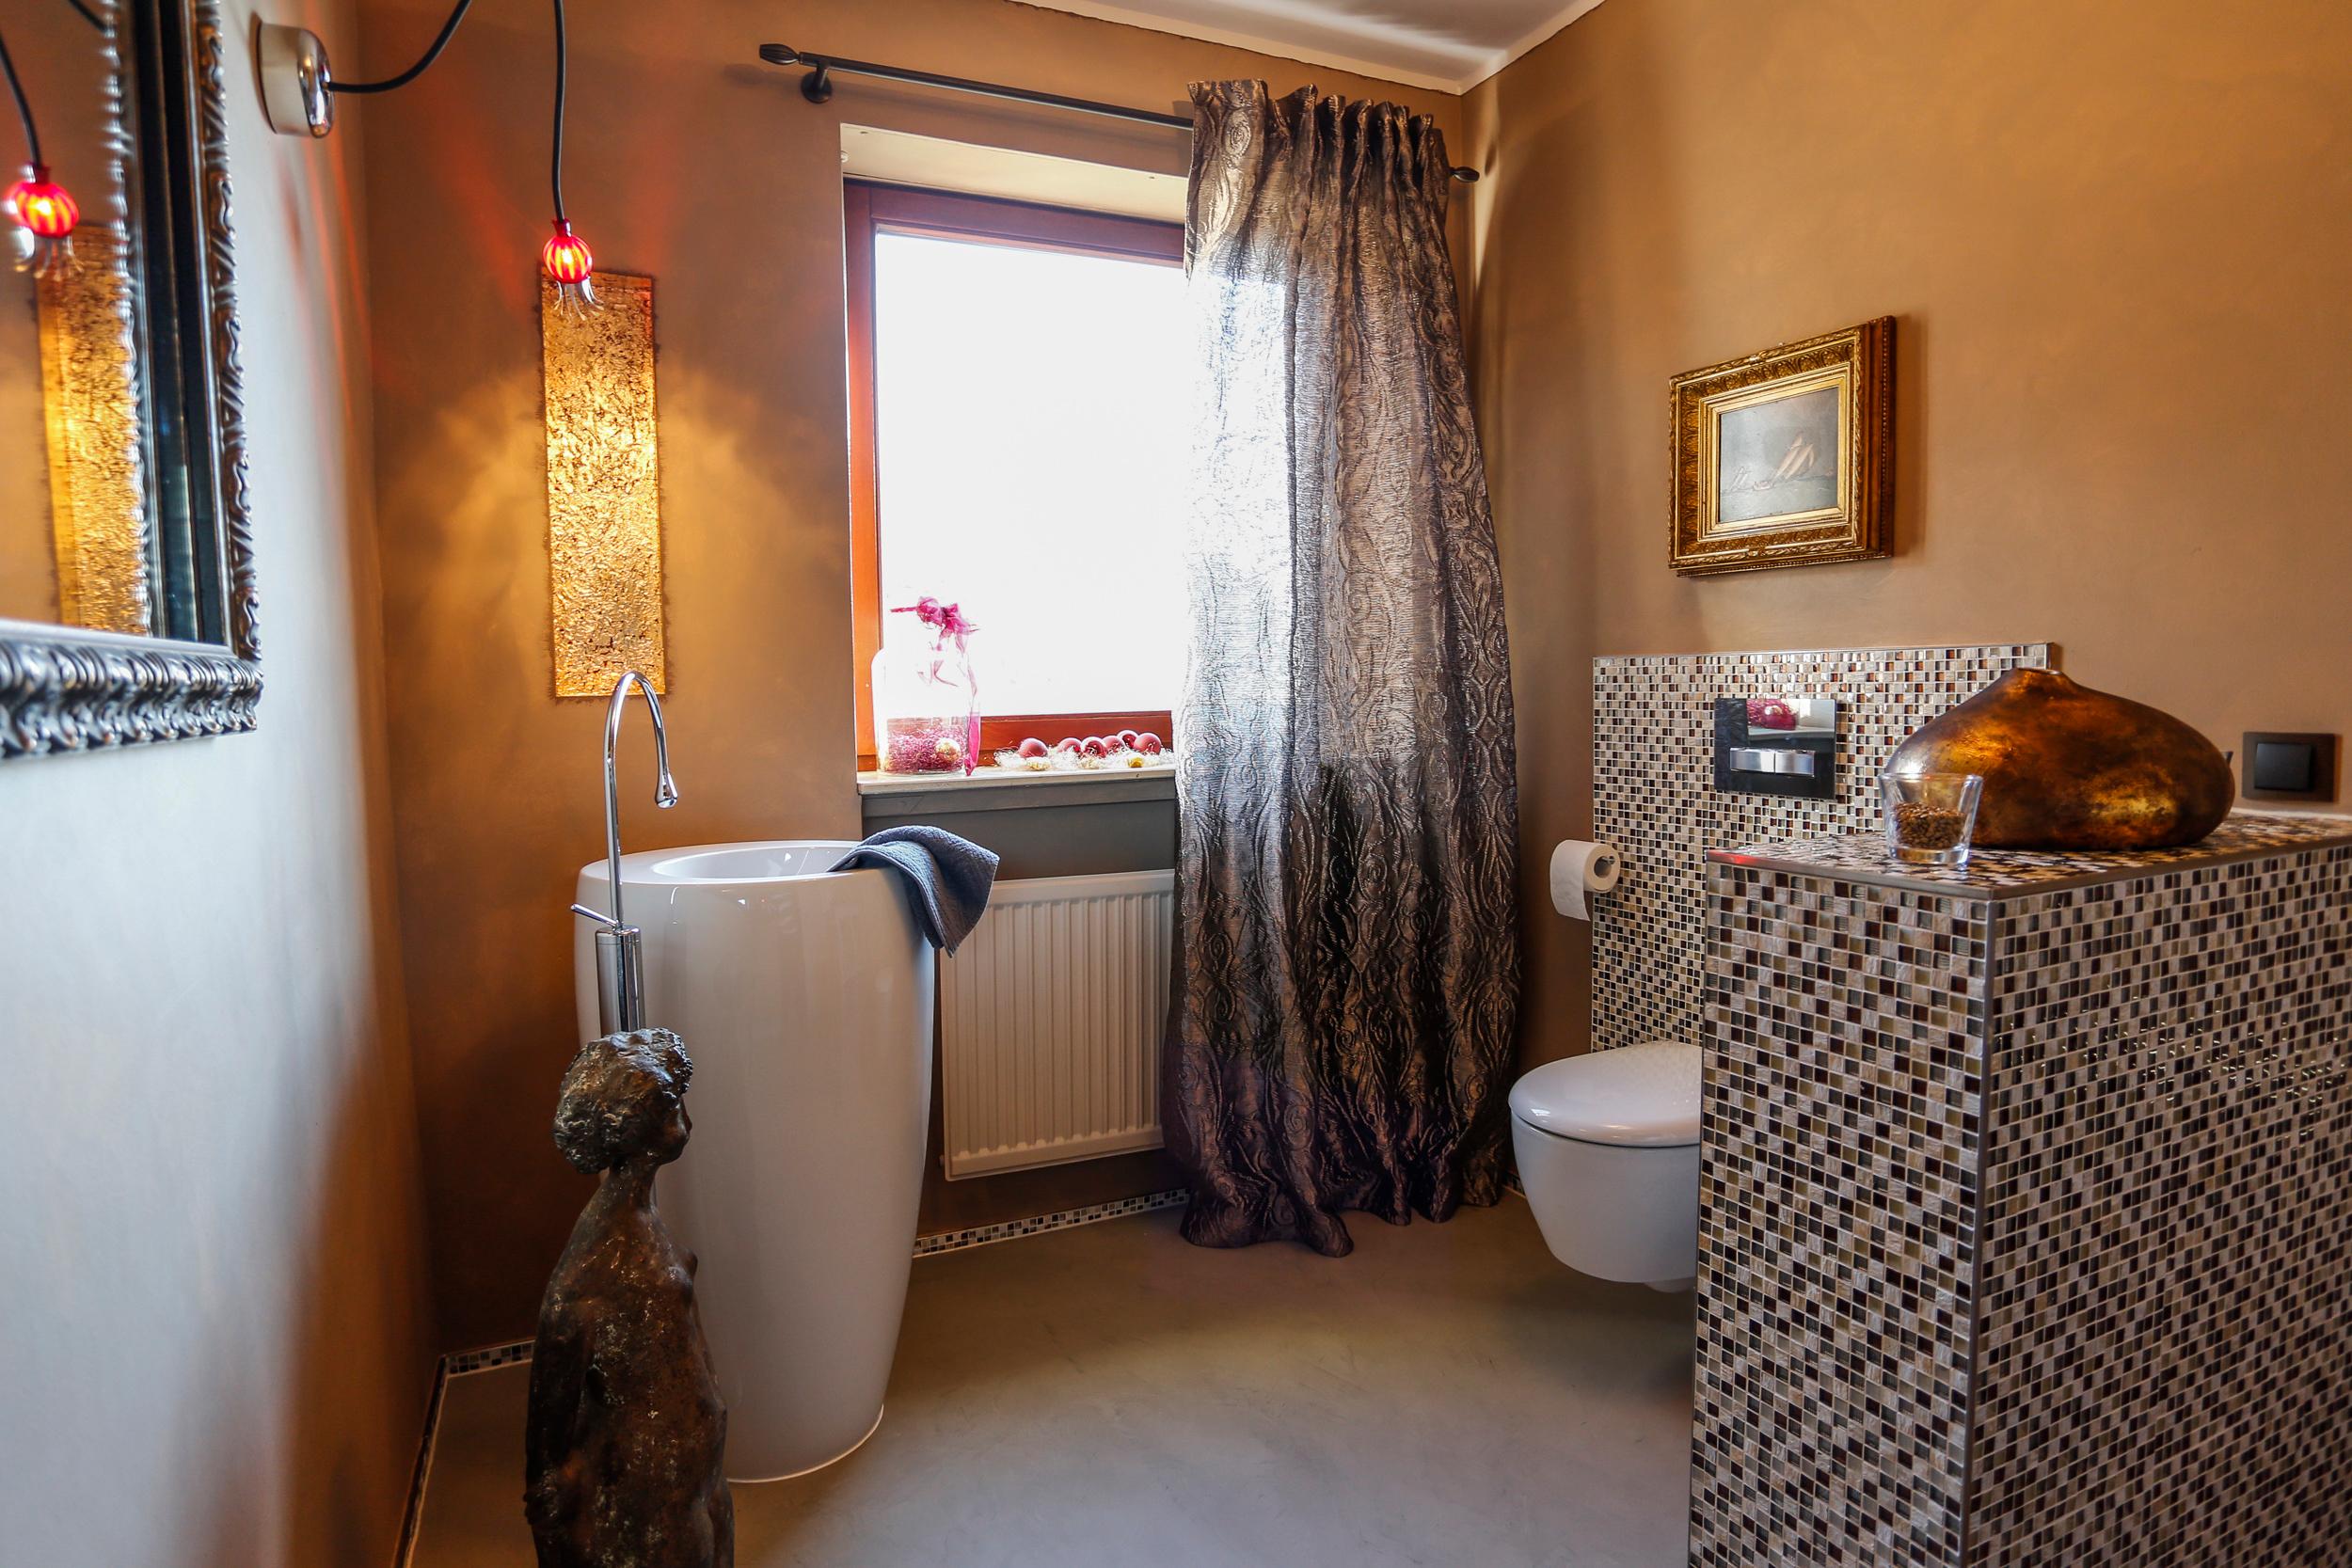 WC de luxe #badewanne #trennwand #blattgold ©triXi kreative Räume